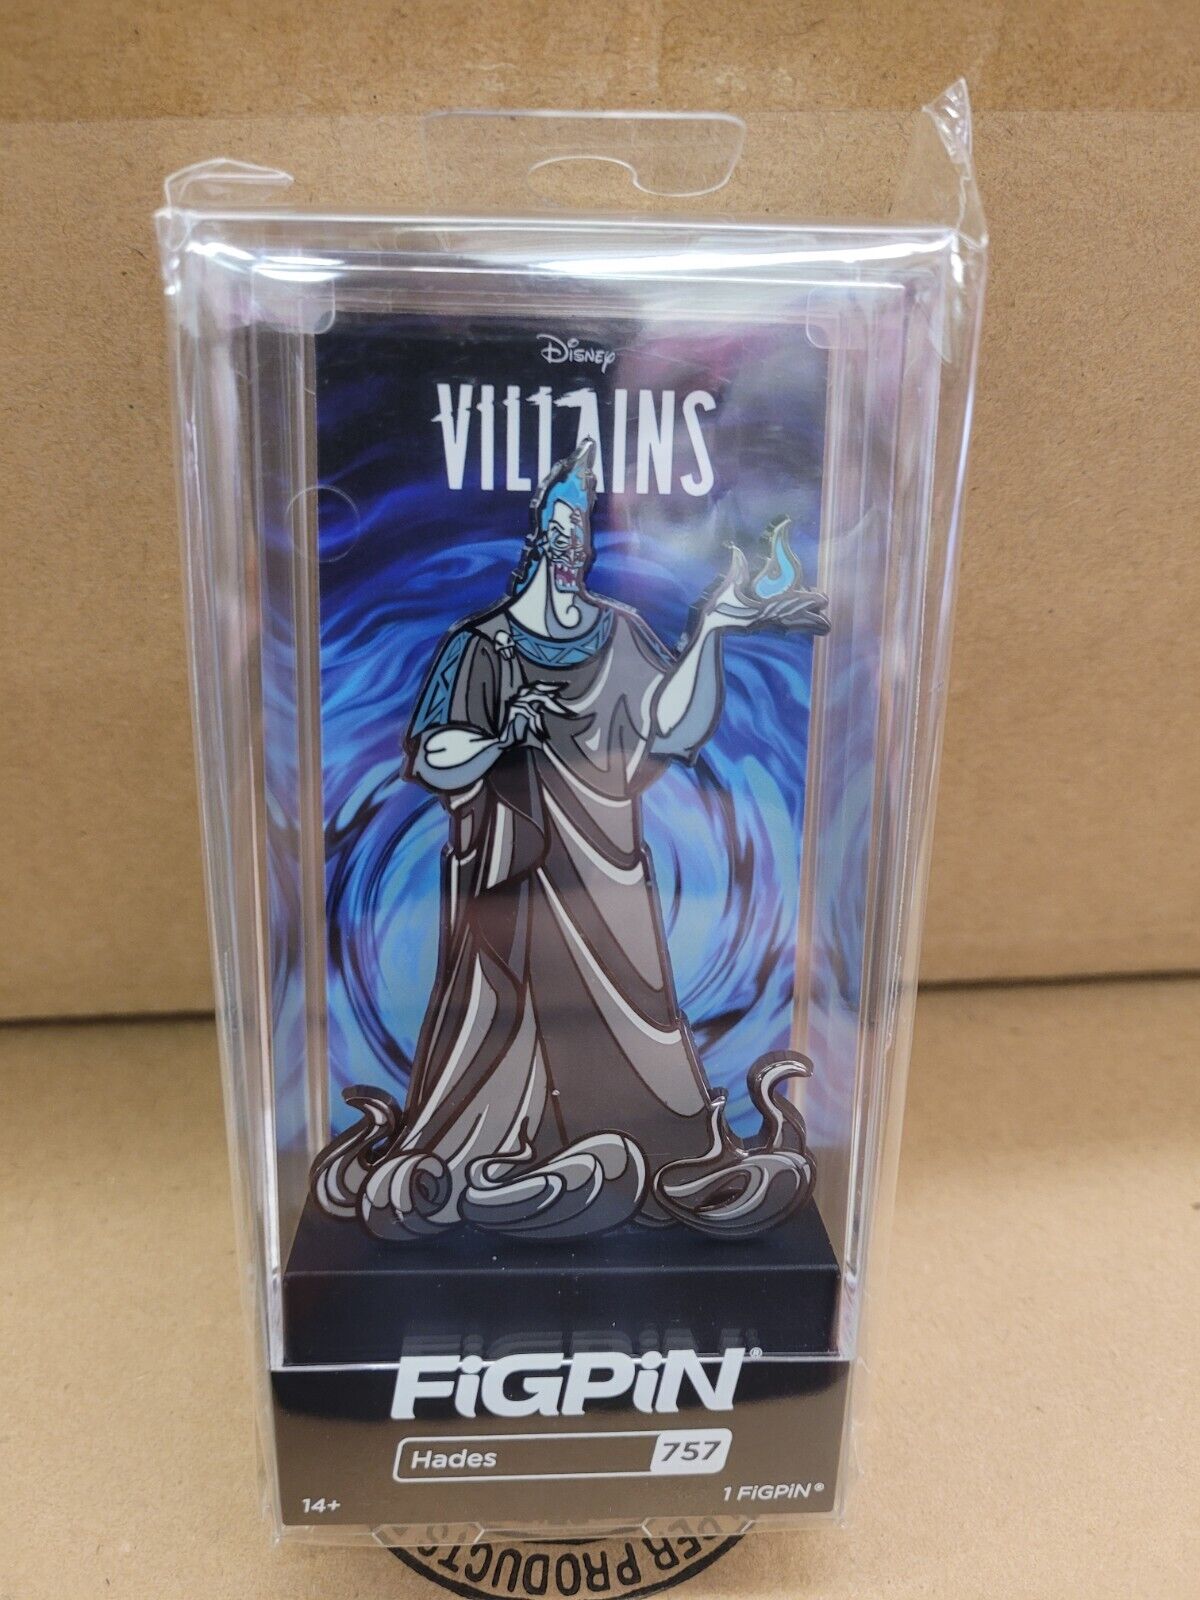 Collectable FIGPIN Disney Villains Hades (757) Pin Brand New